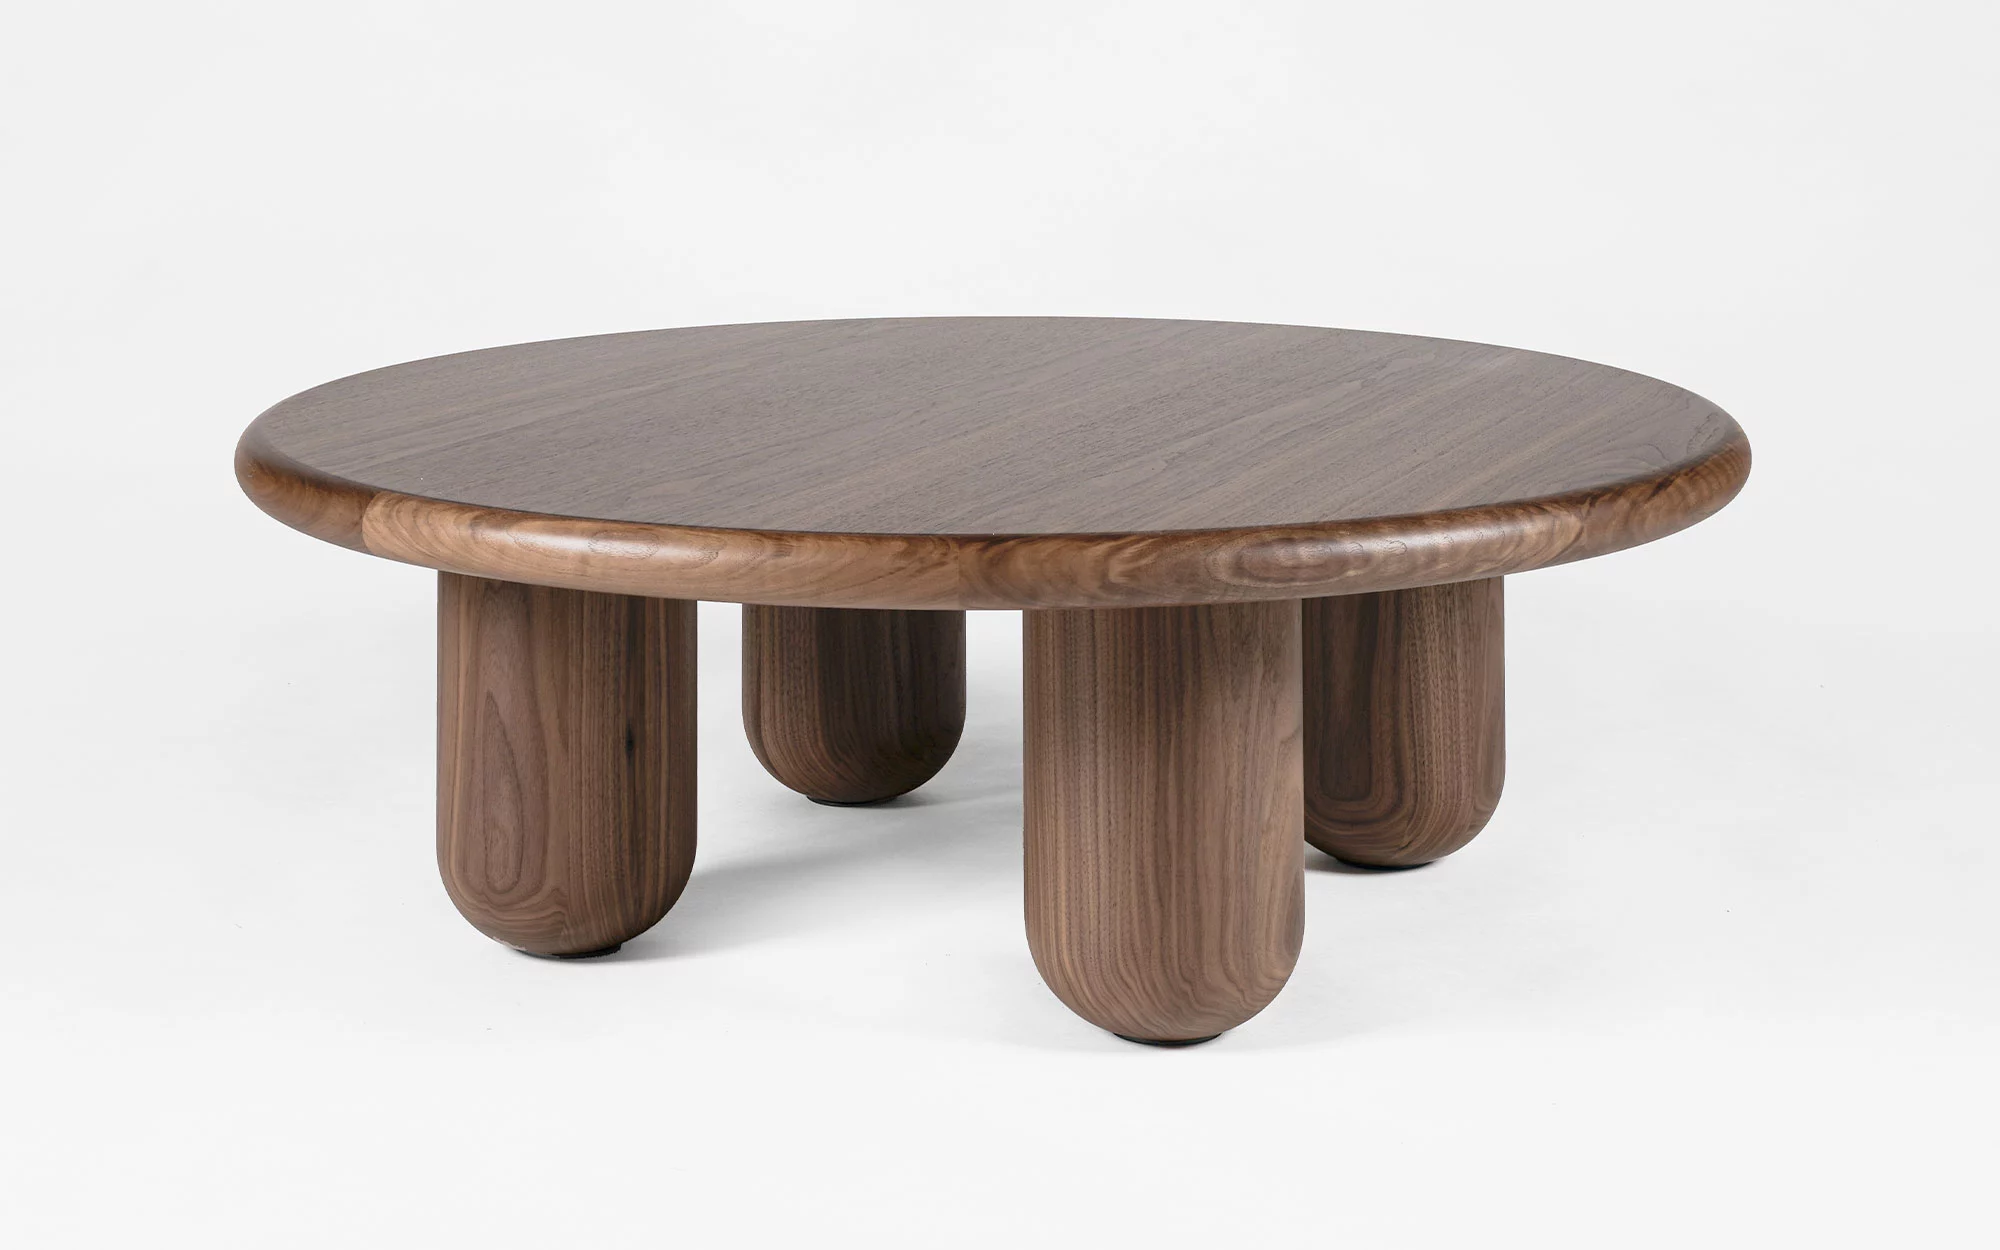 Organism coffee table - Jaime Hayon - Pendant light - Galerie kreo